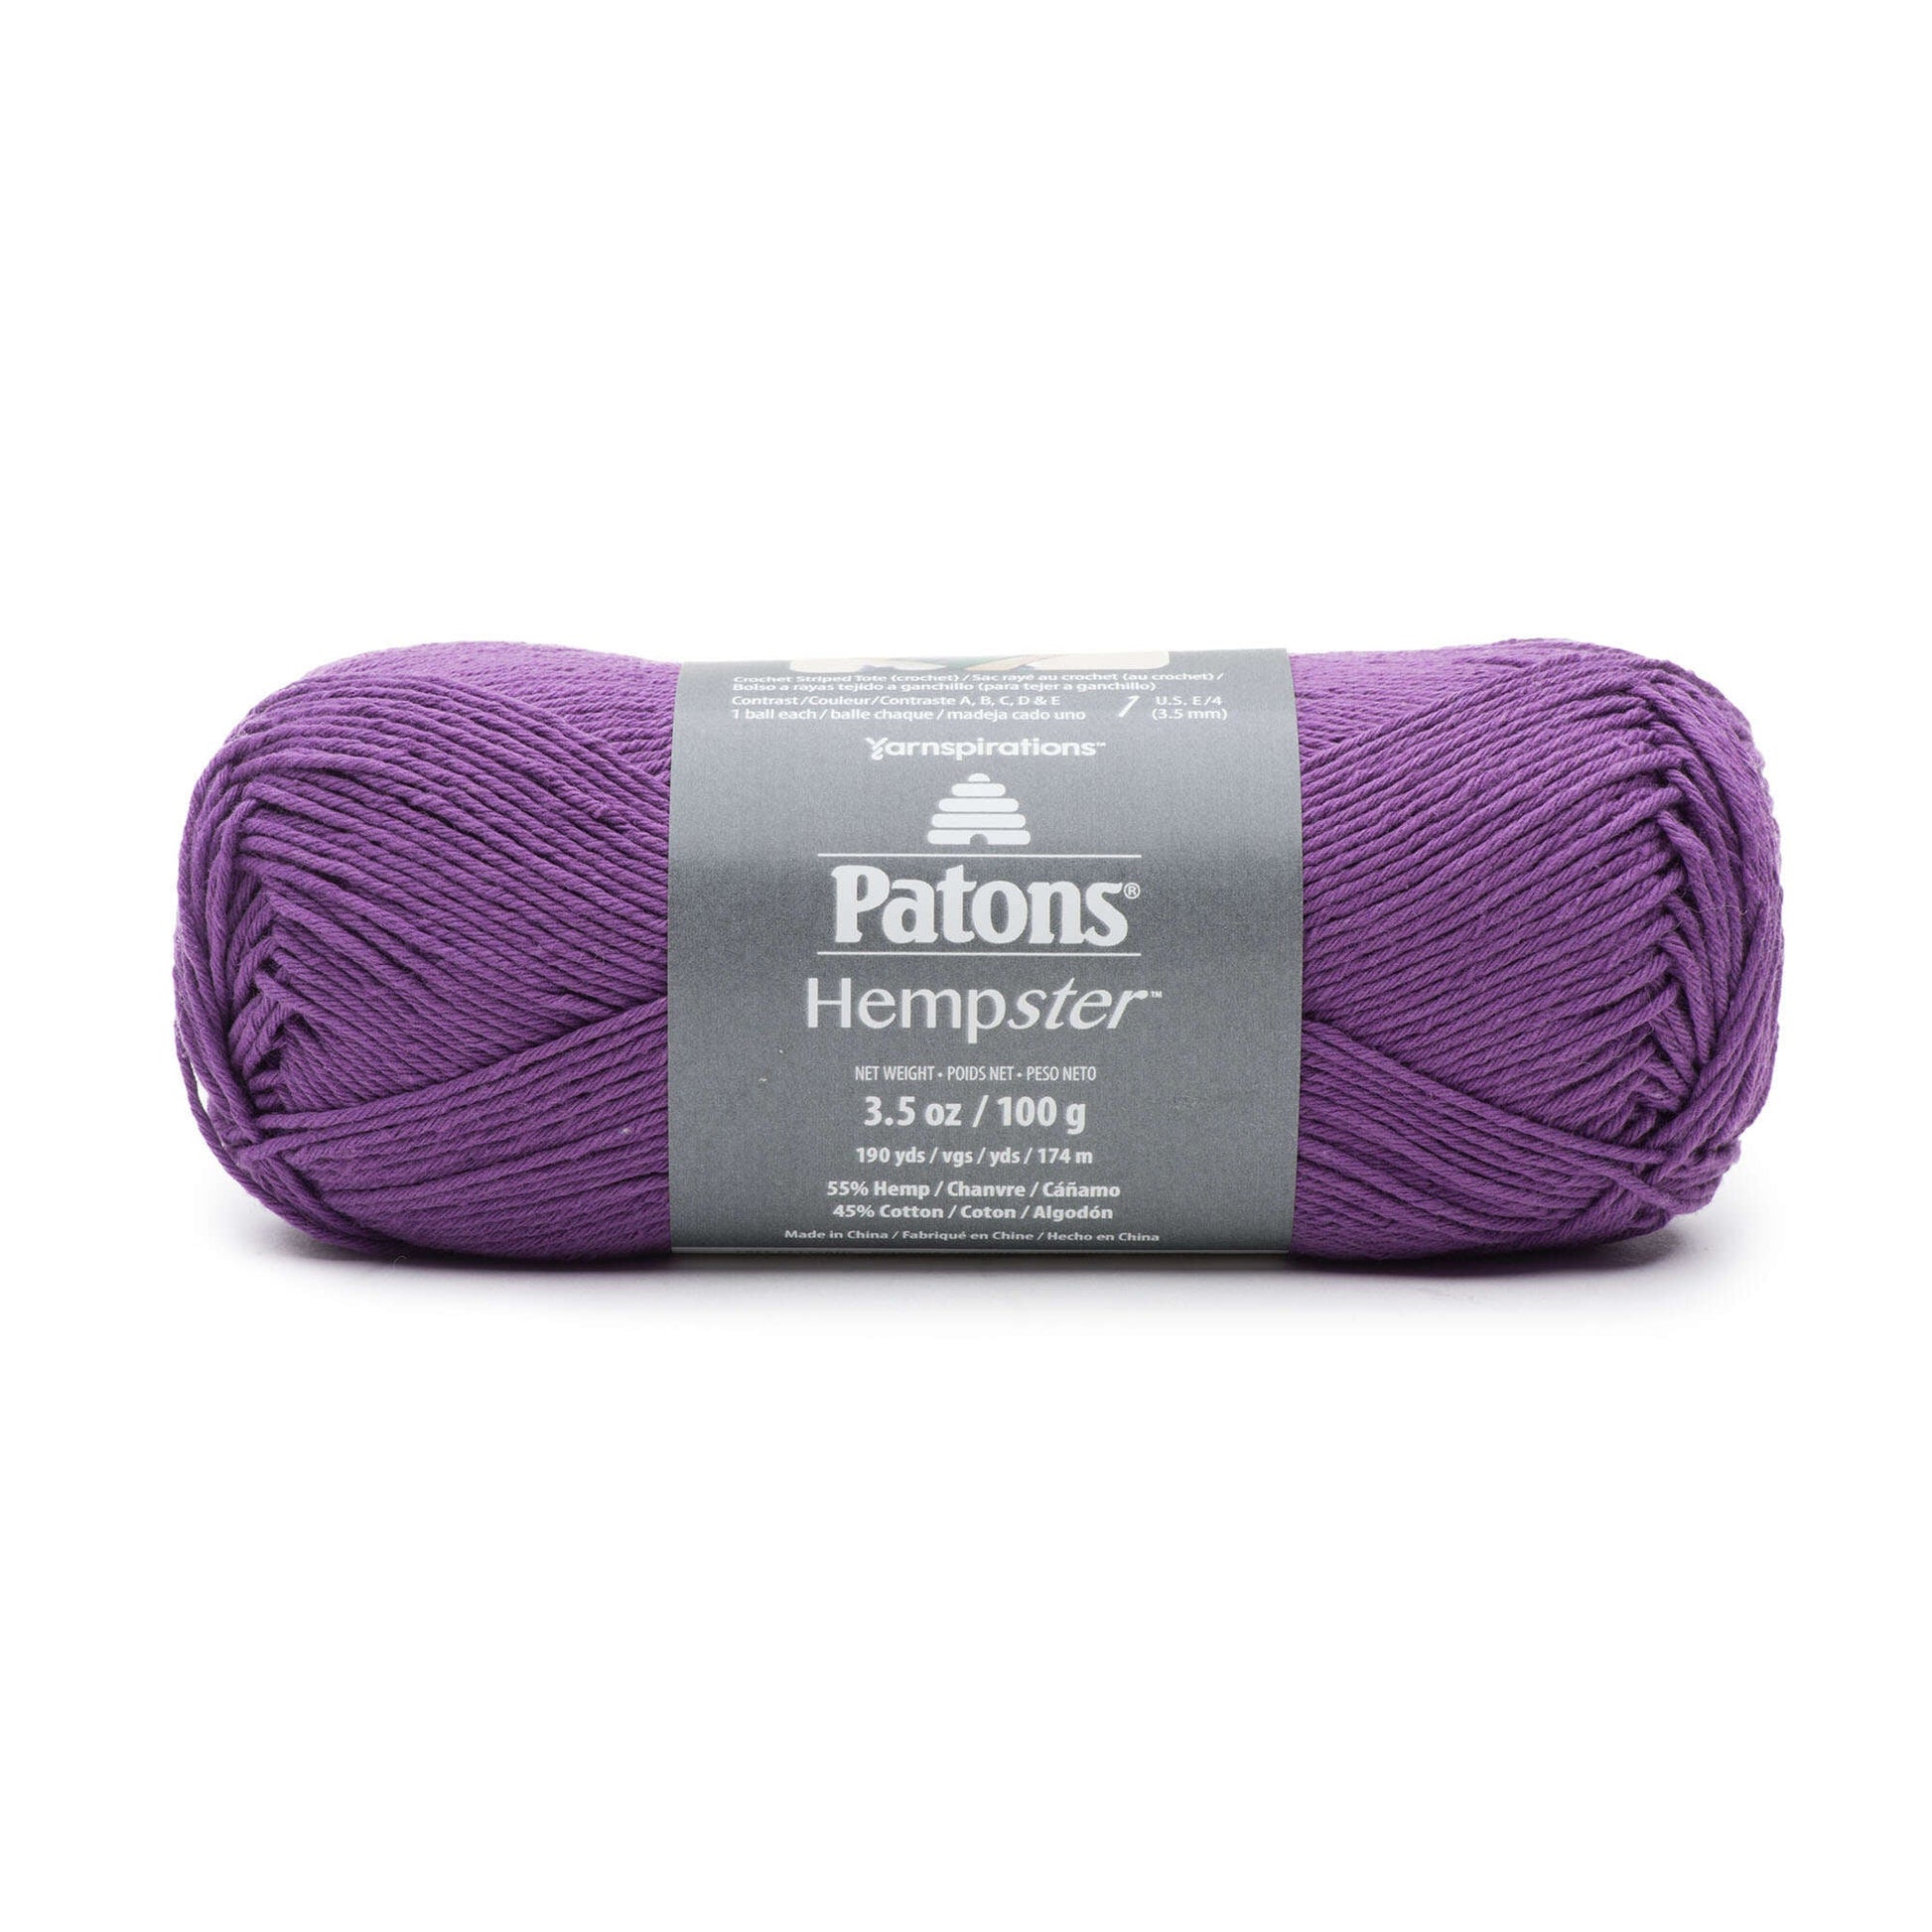 Patons Hempster Yarn - Discontinued Shades